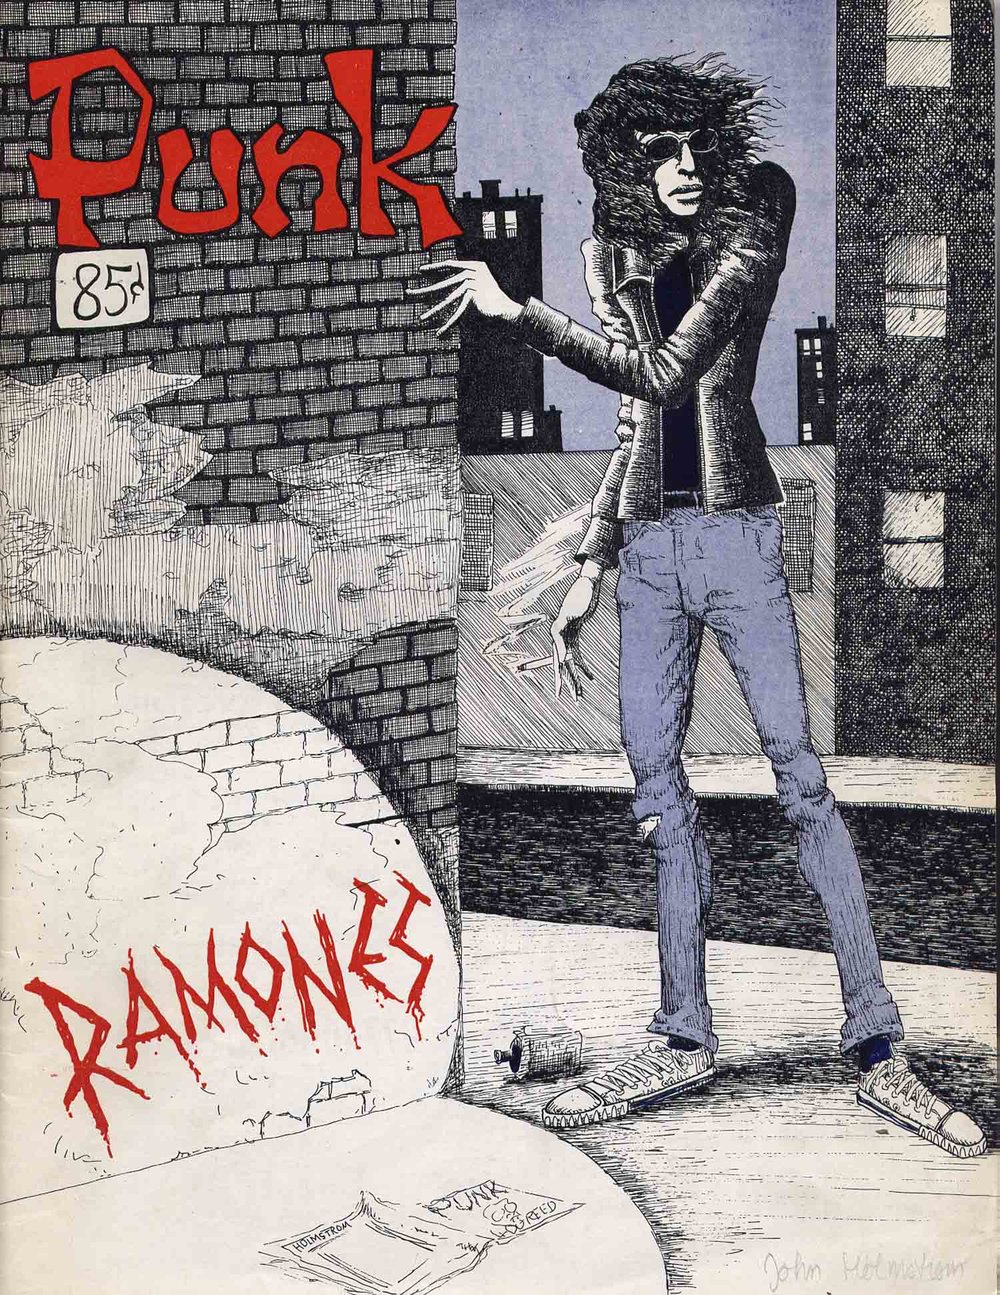 Punk Magazine, Issue 3, April 1976